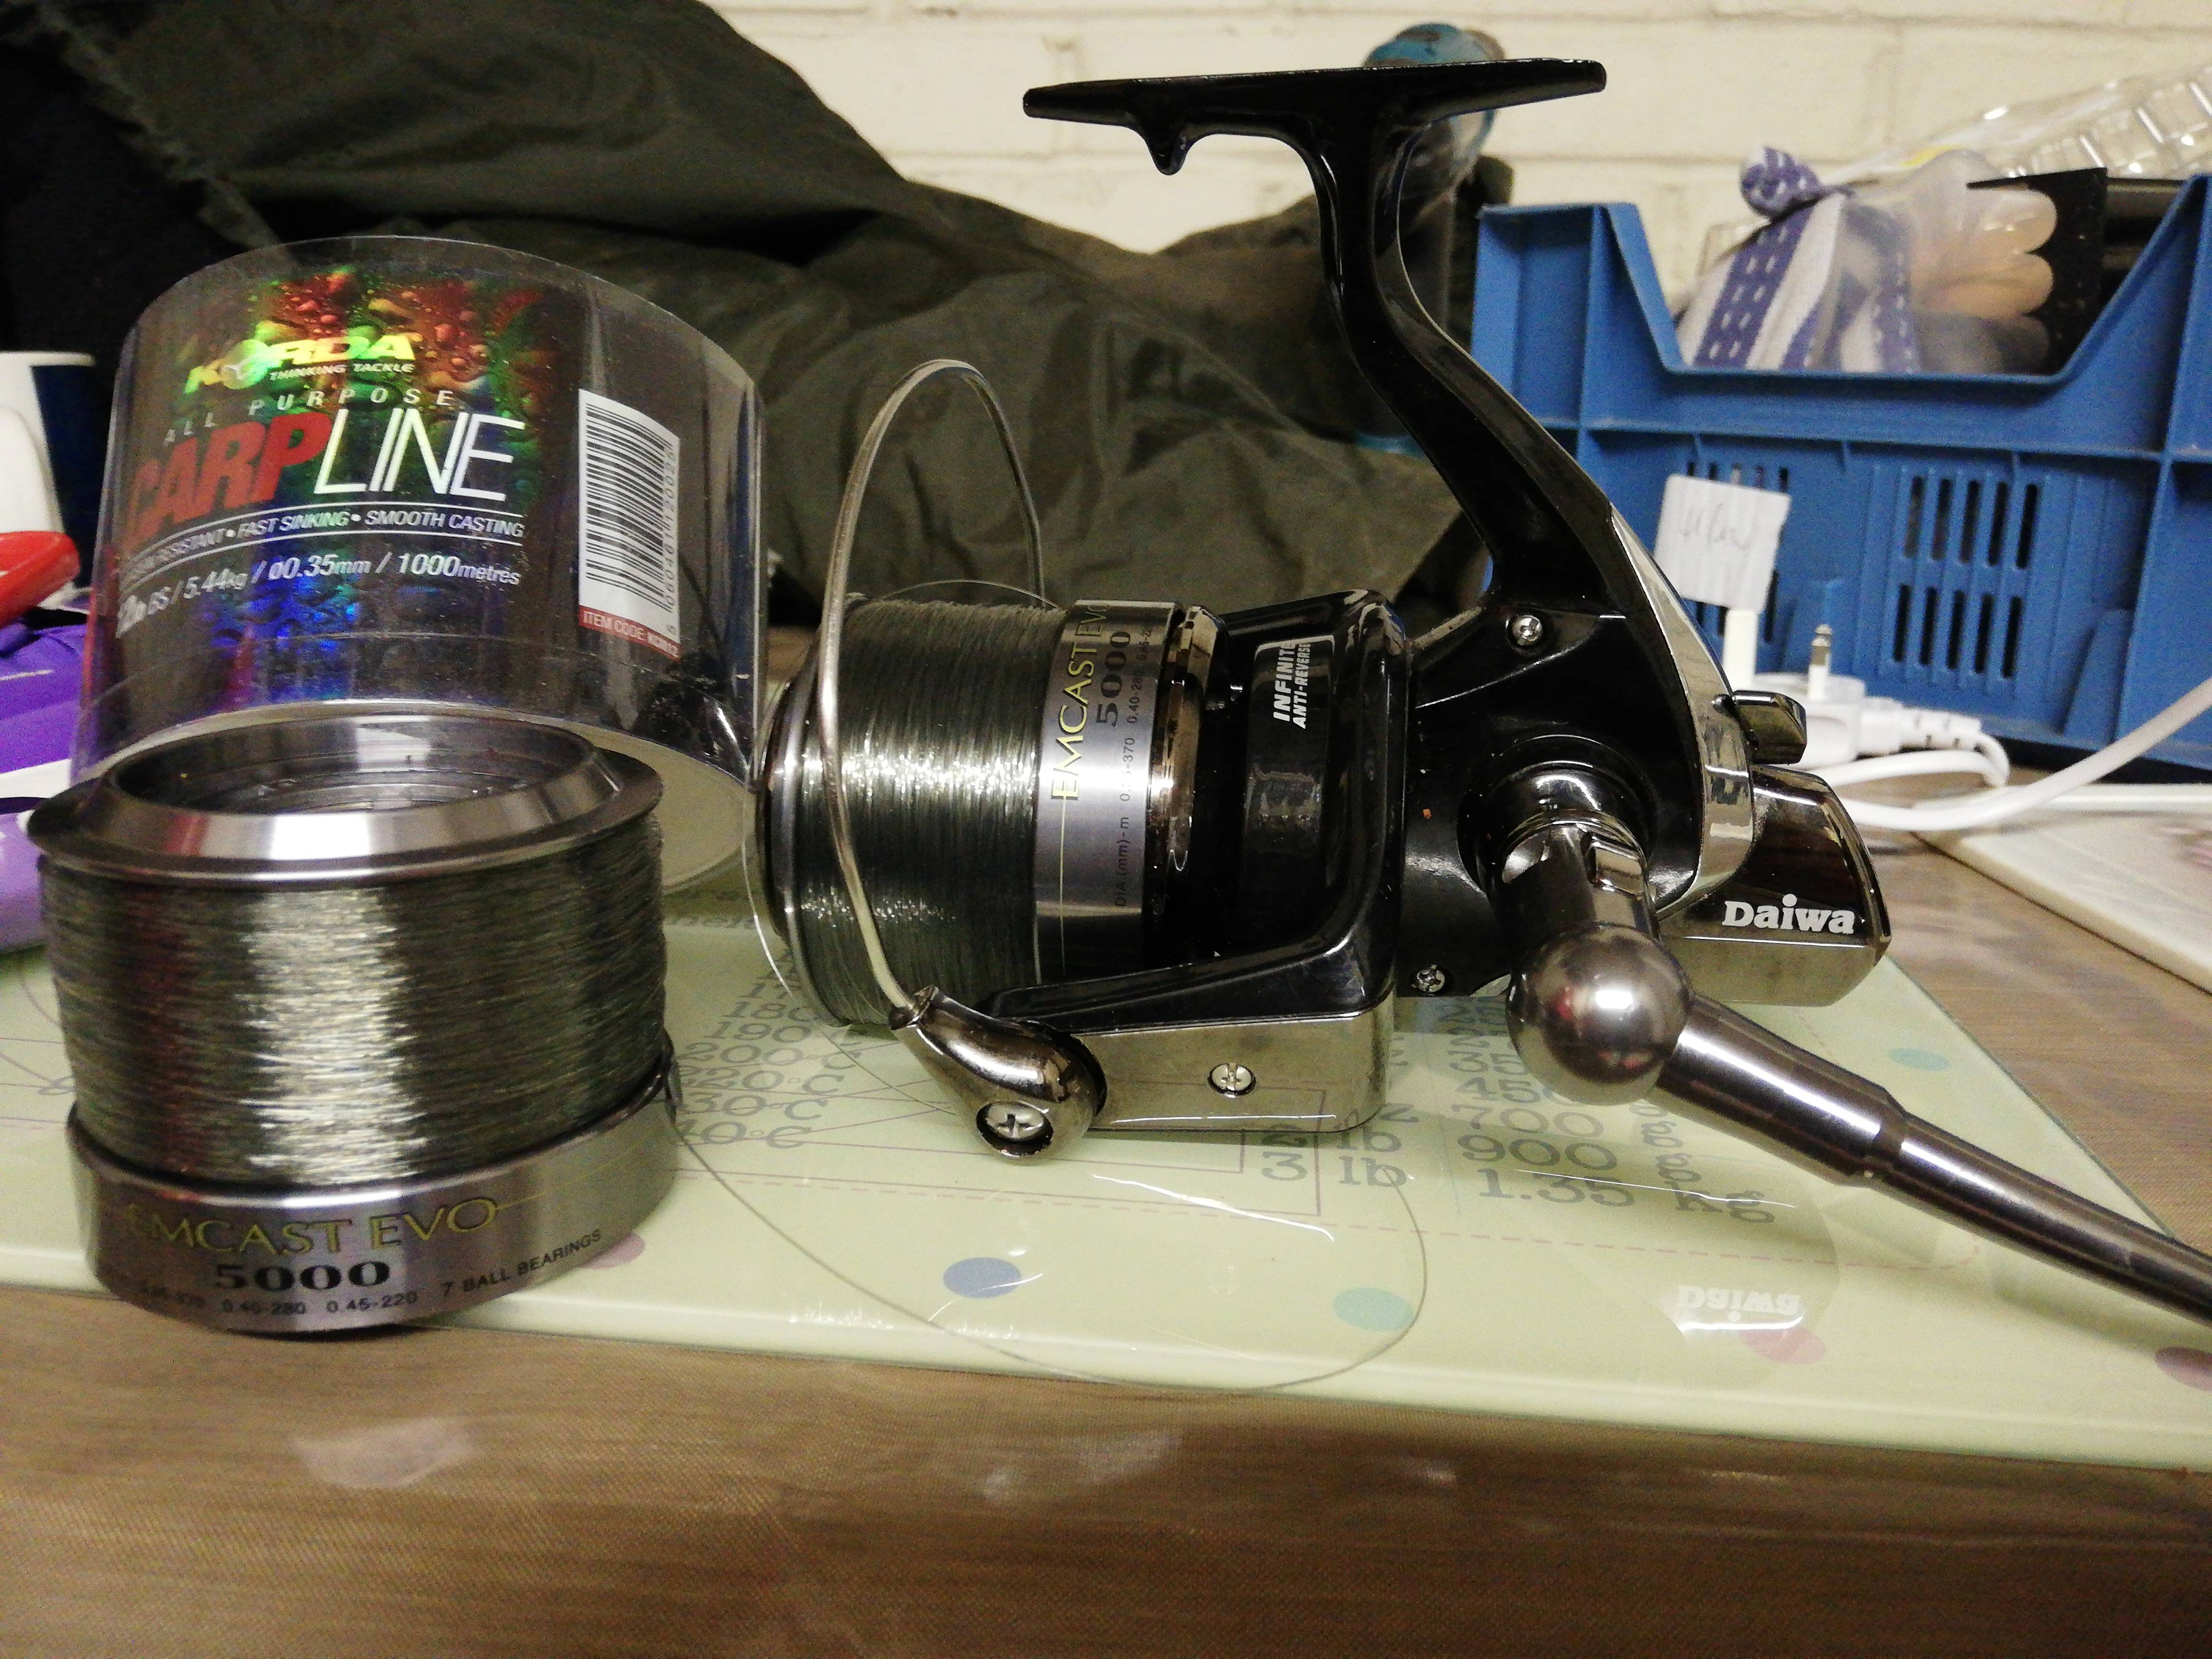 Daiwa Emblem BR25A. - Carp Fishing Tackle and  Equipment - Carp.com Carp Forum - Fishing Forum